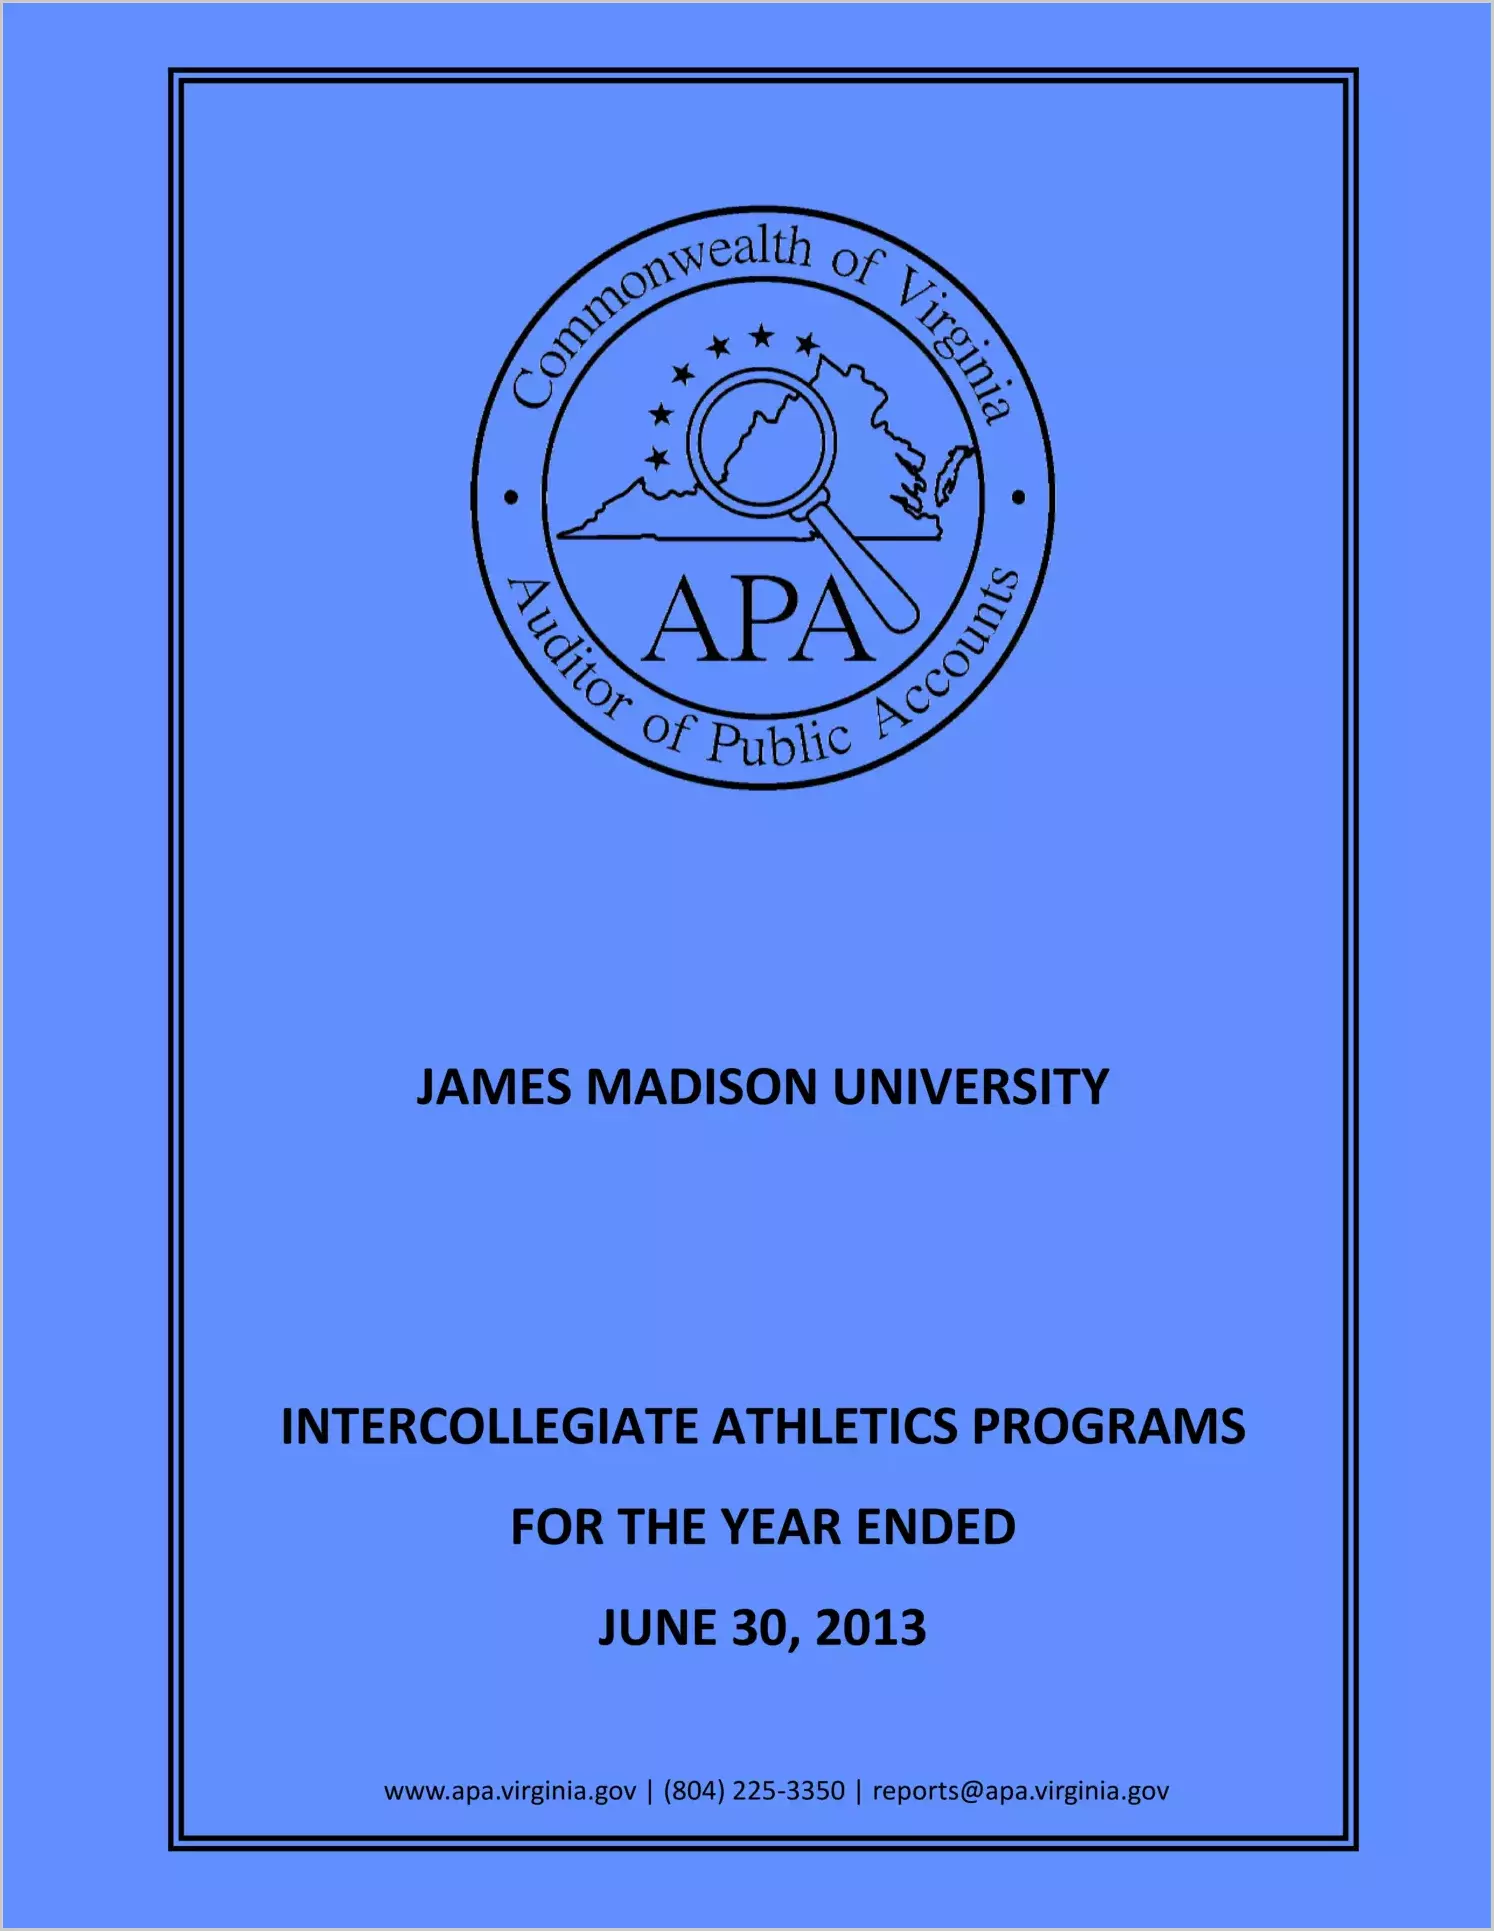 James Madison University Intercollegiate Athletics Programs for the year ended June 30, 2013